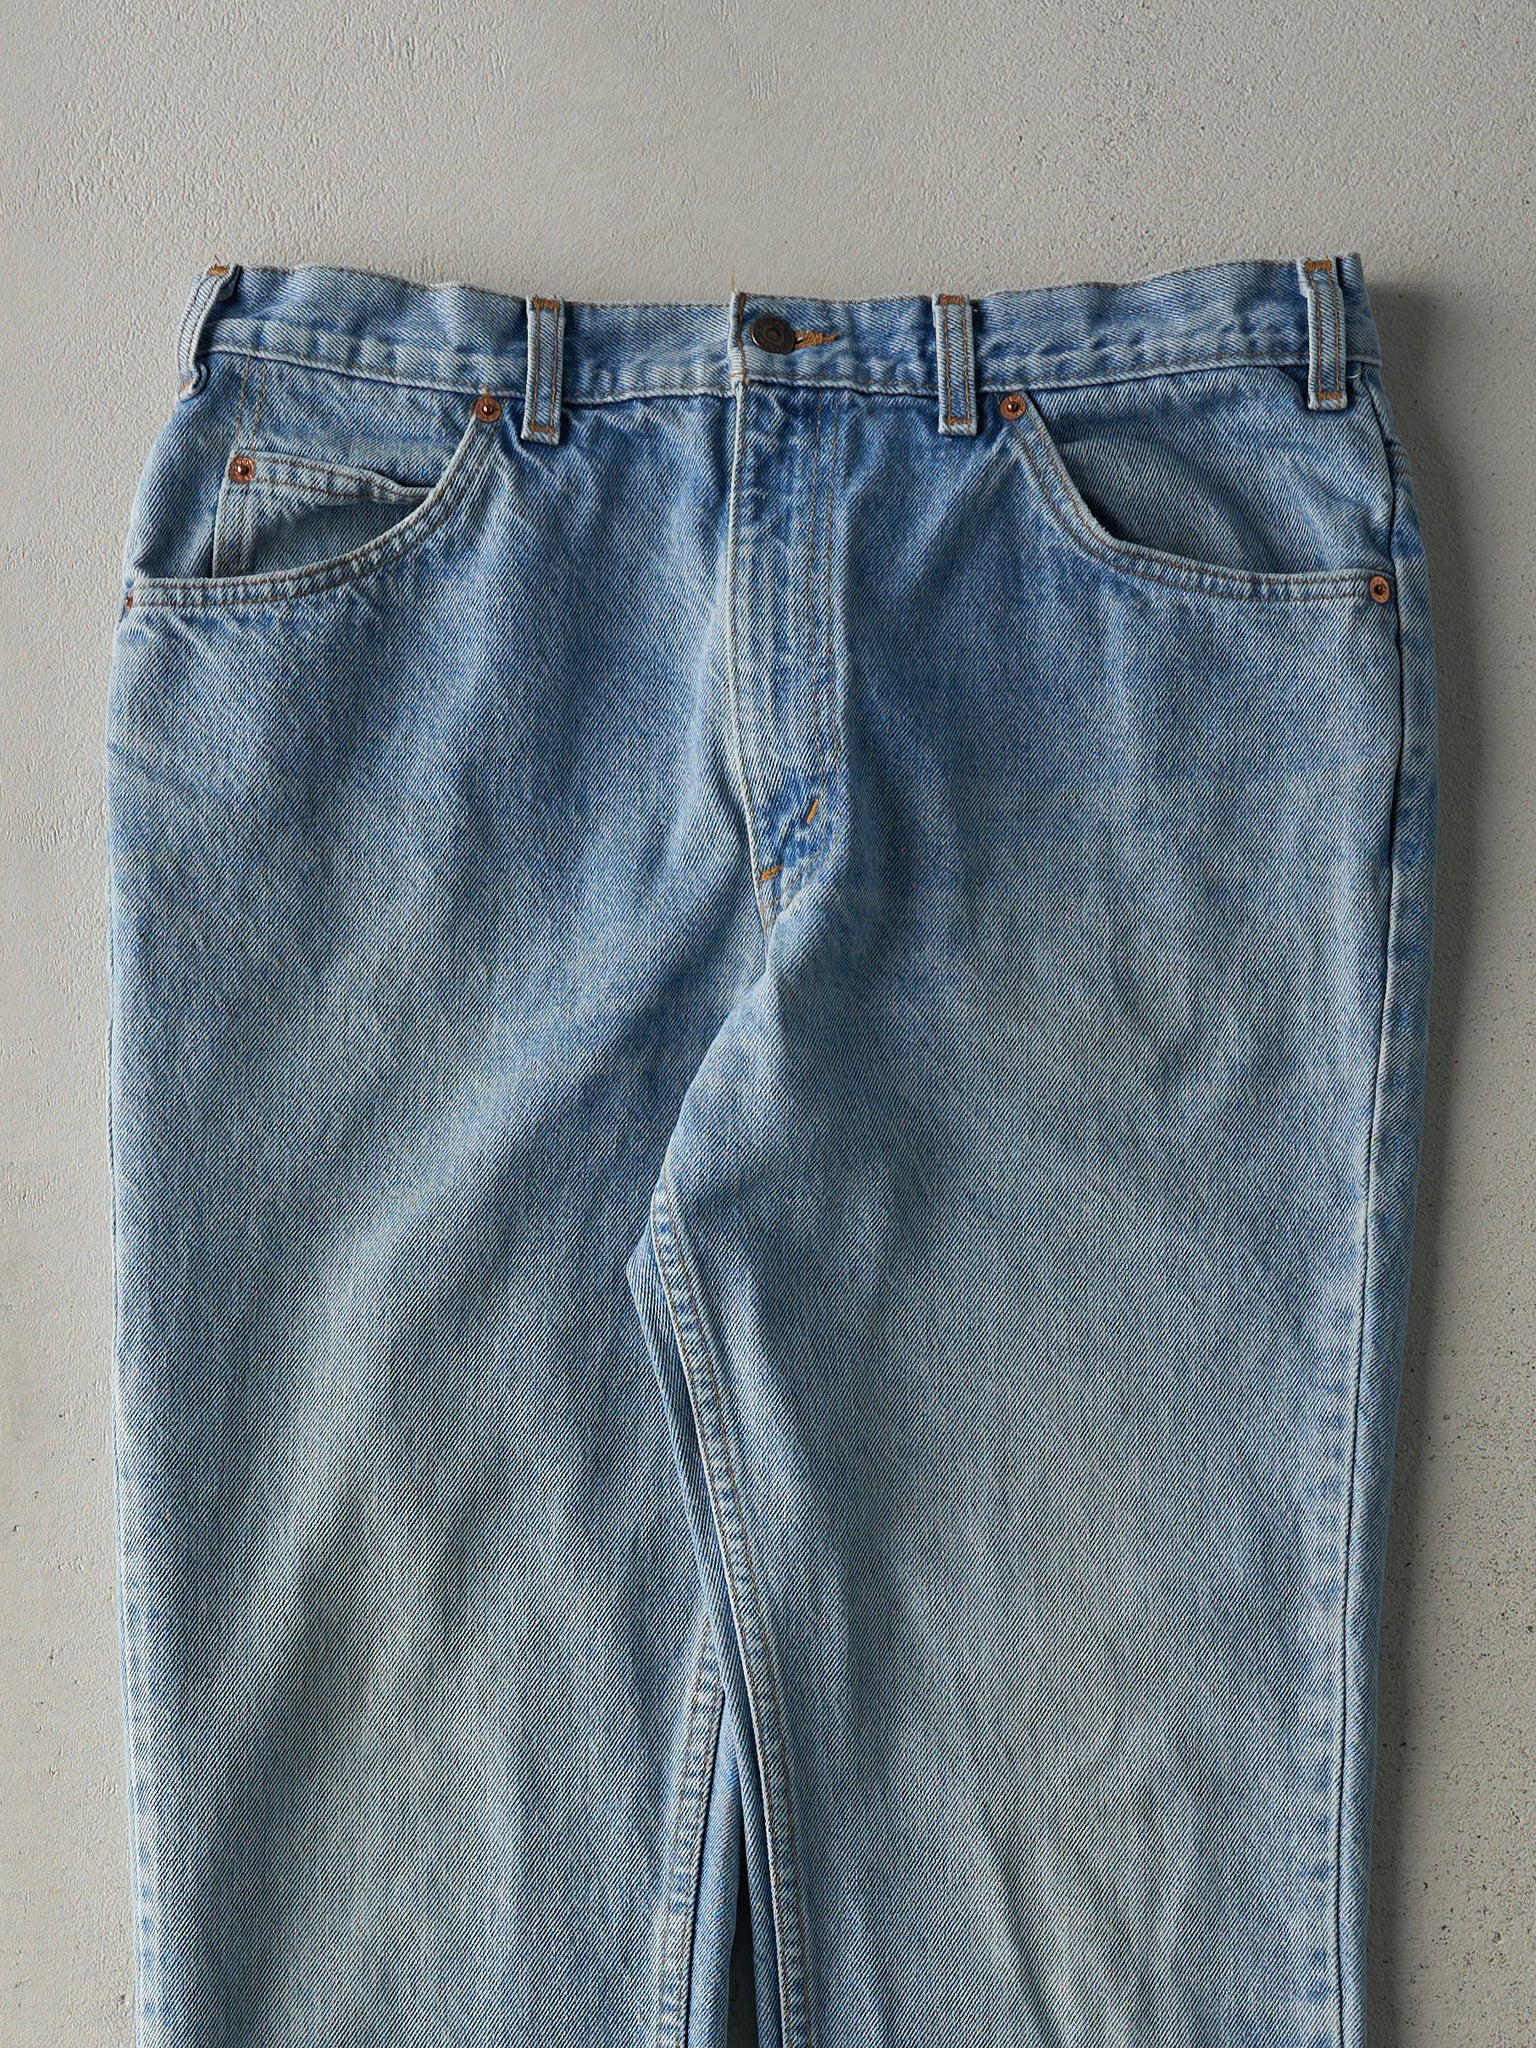 Vintage 90s Light Wash Levi's Orange Tab Jeans (34x33.5)